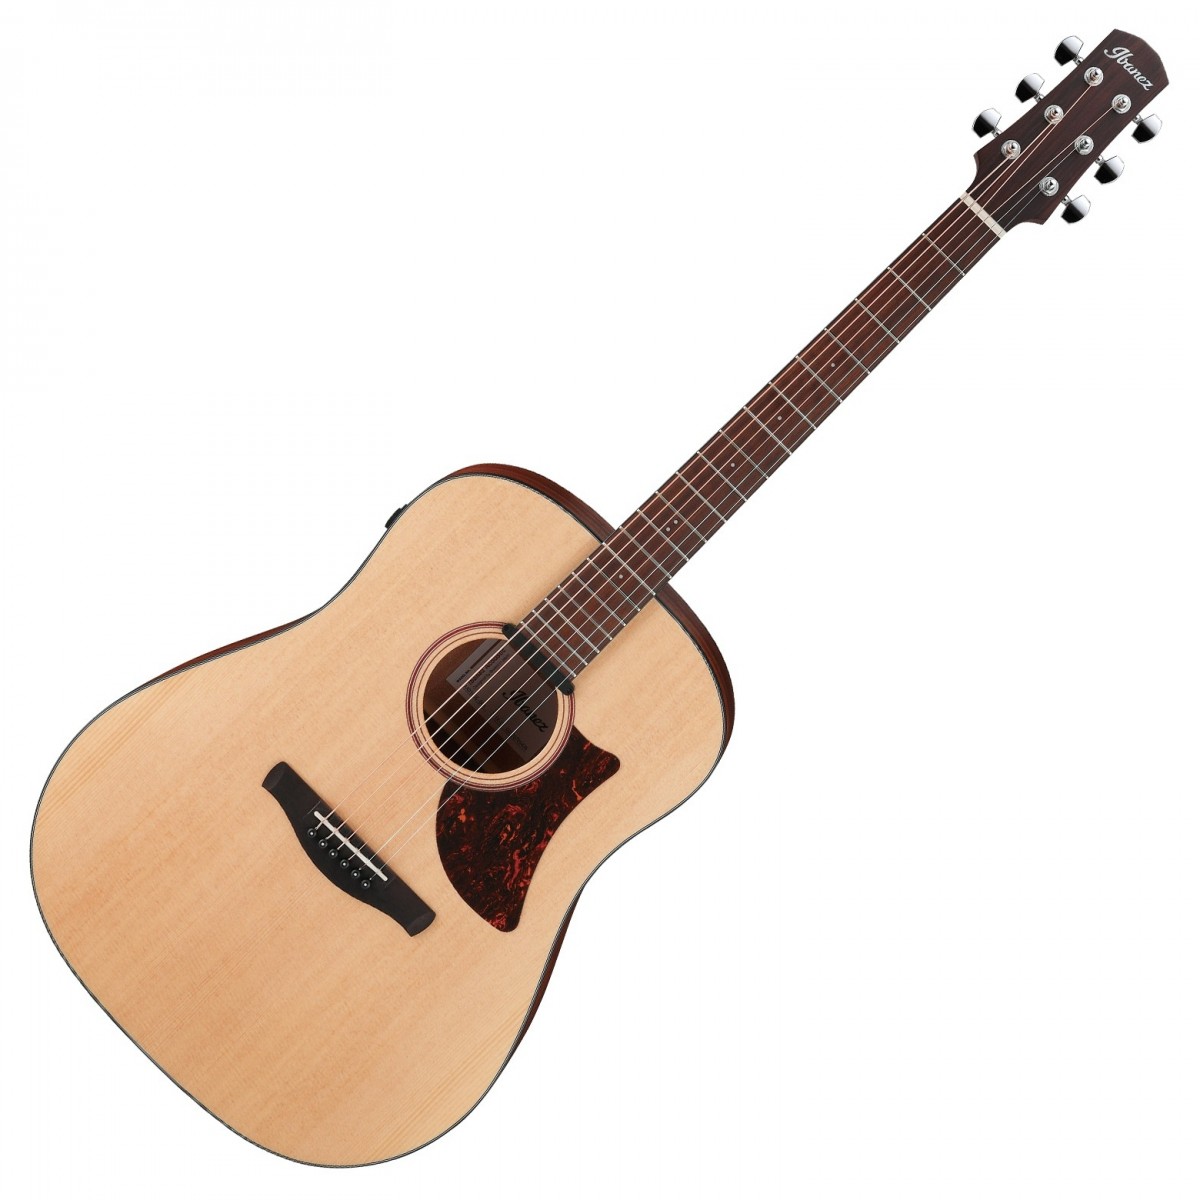 Гитара ямаха ф. Yamaha fx370c Acoustic. Акустическая гитара Fender Squier sa-150. Yamaha f310. Акустическая гитара Yamaha f310.